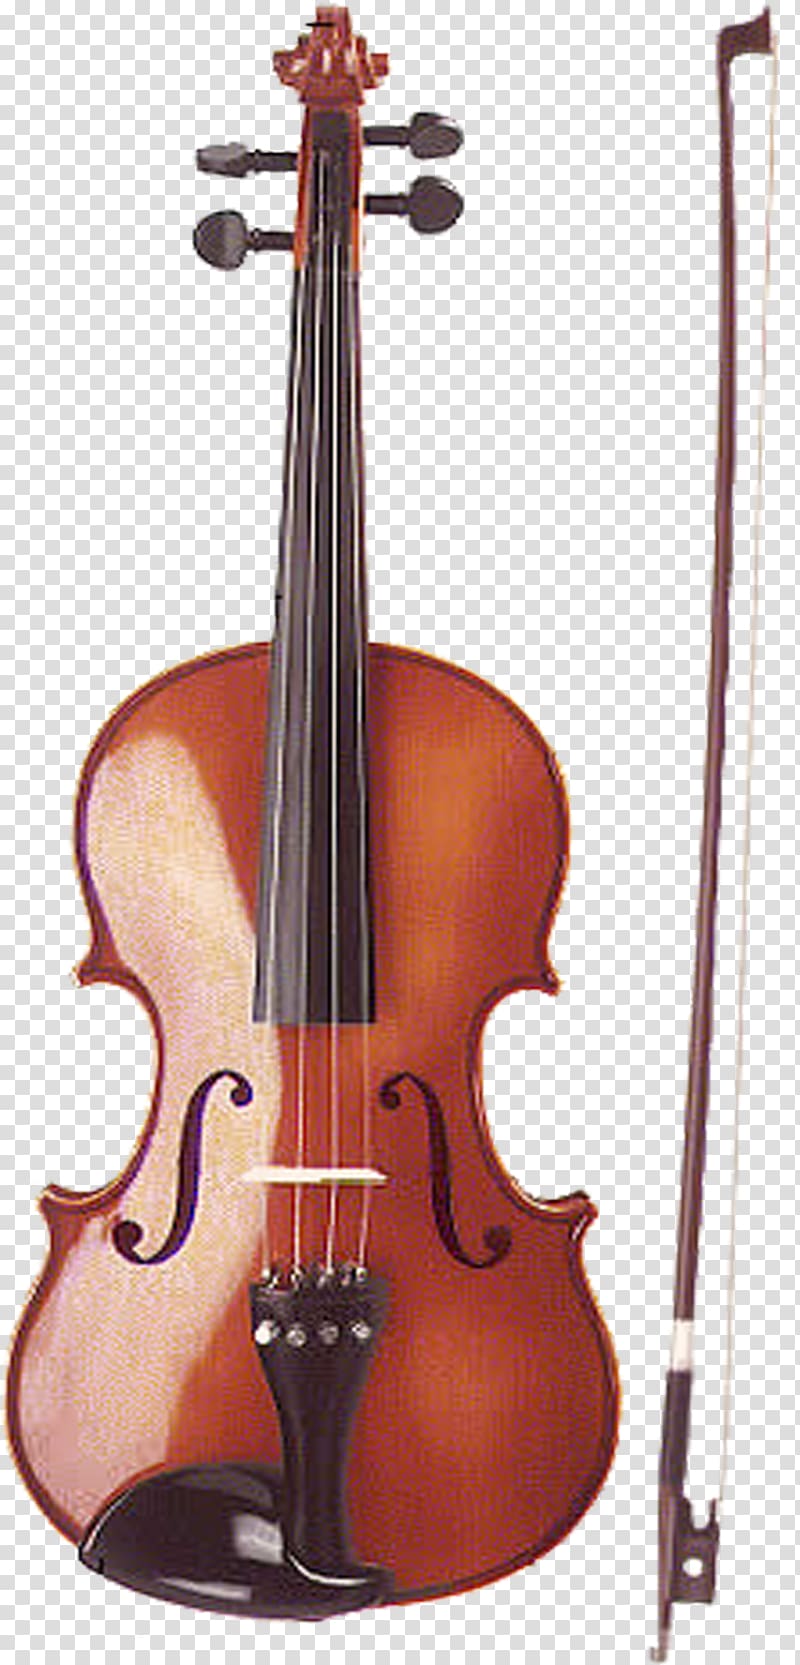 Cremona Violin Stradivarius Cello Musical Instruments, violin transparent background PNG clipart